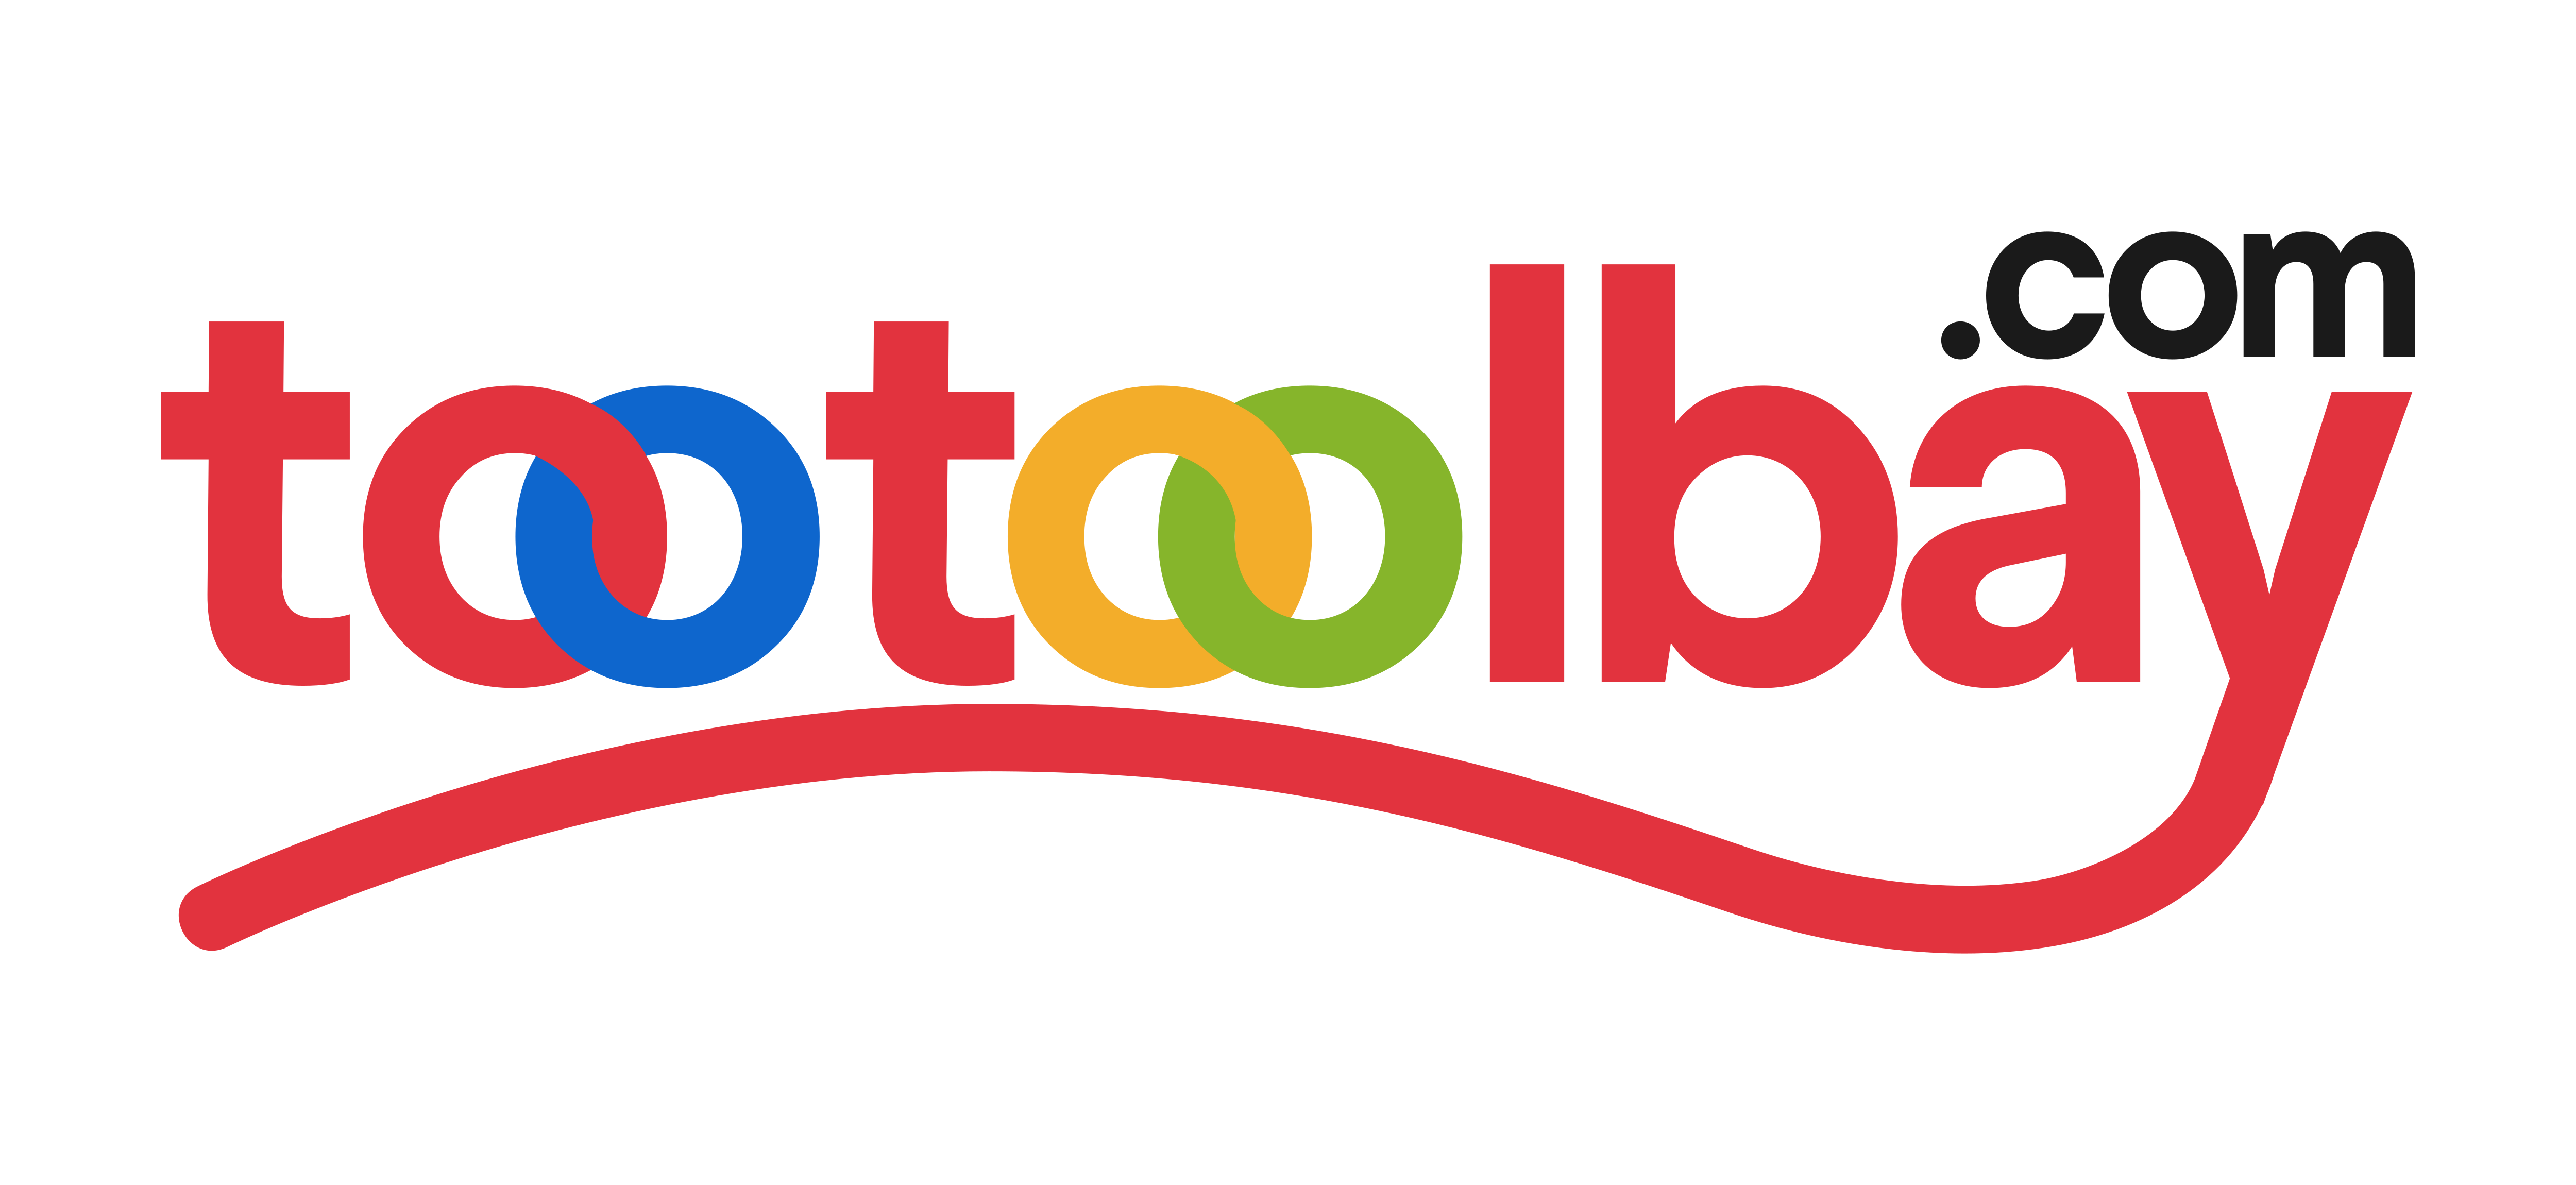 Tootoolbay